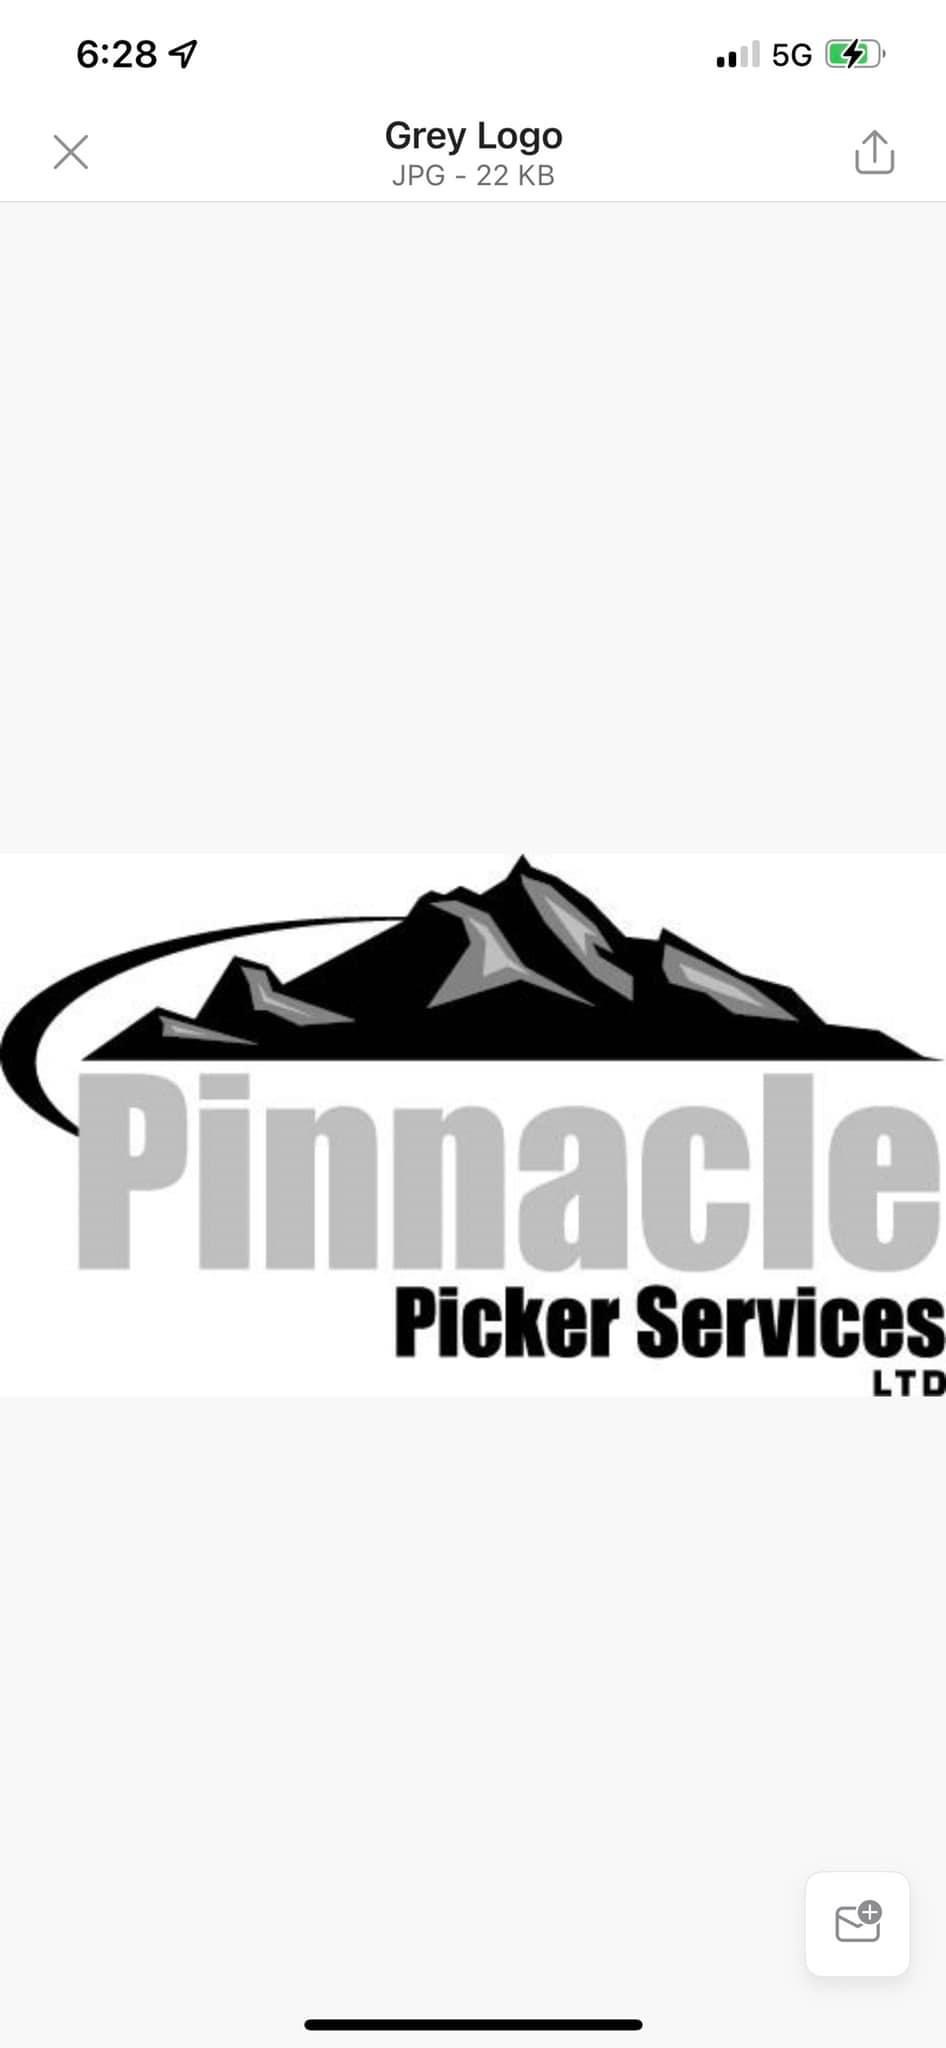 Pinnacle Picker Services